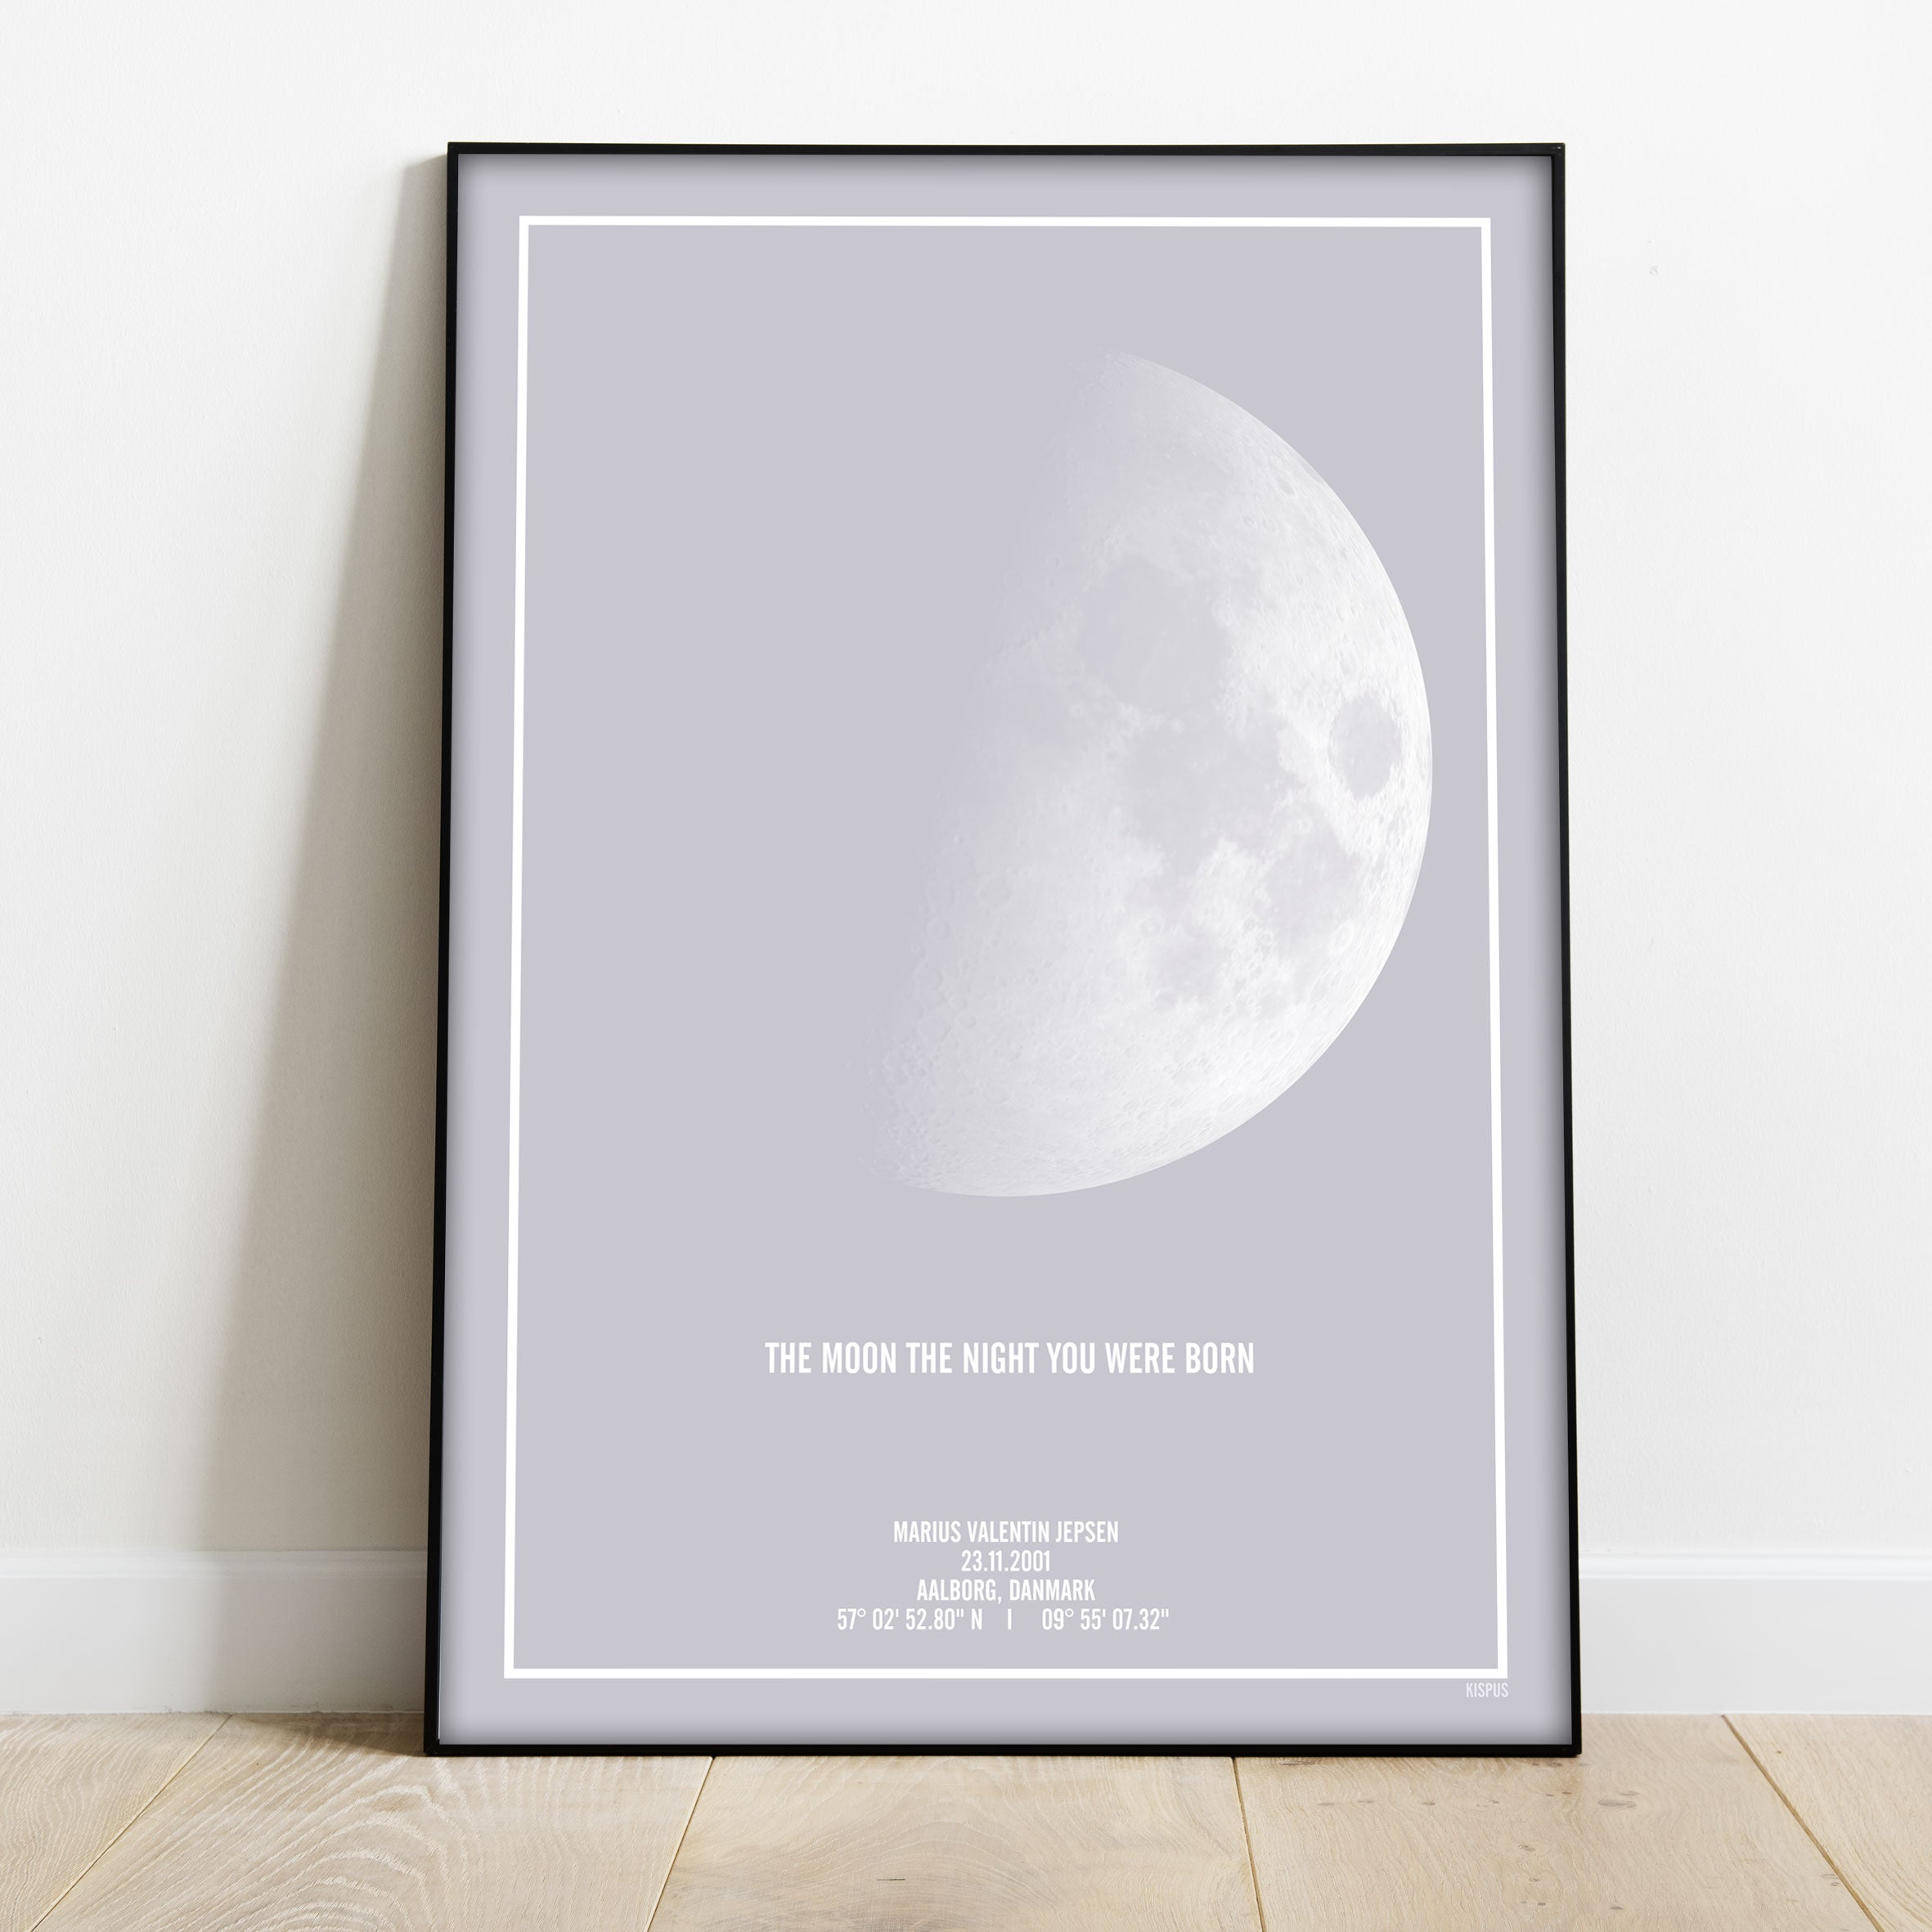 Lysegår måneplakat med teksten THE MOON THE NIGHT YOU WERE BORN